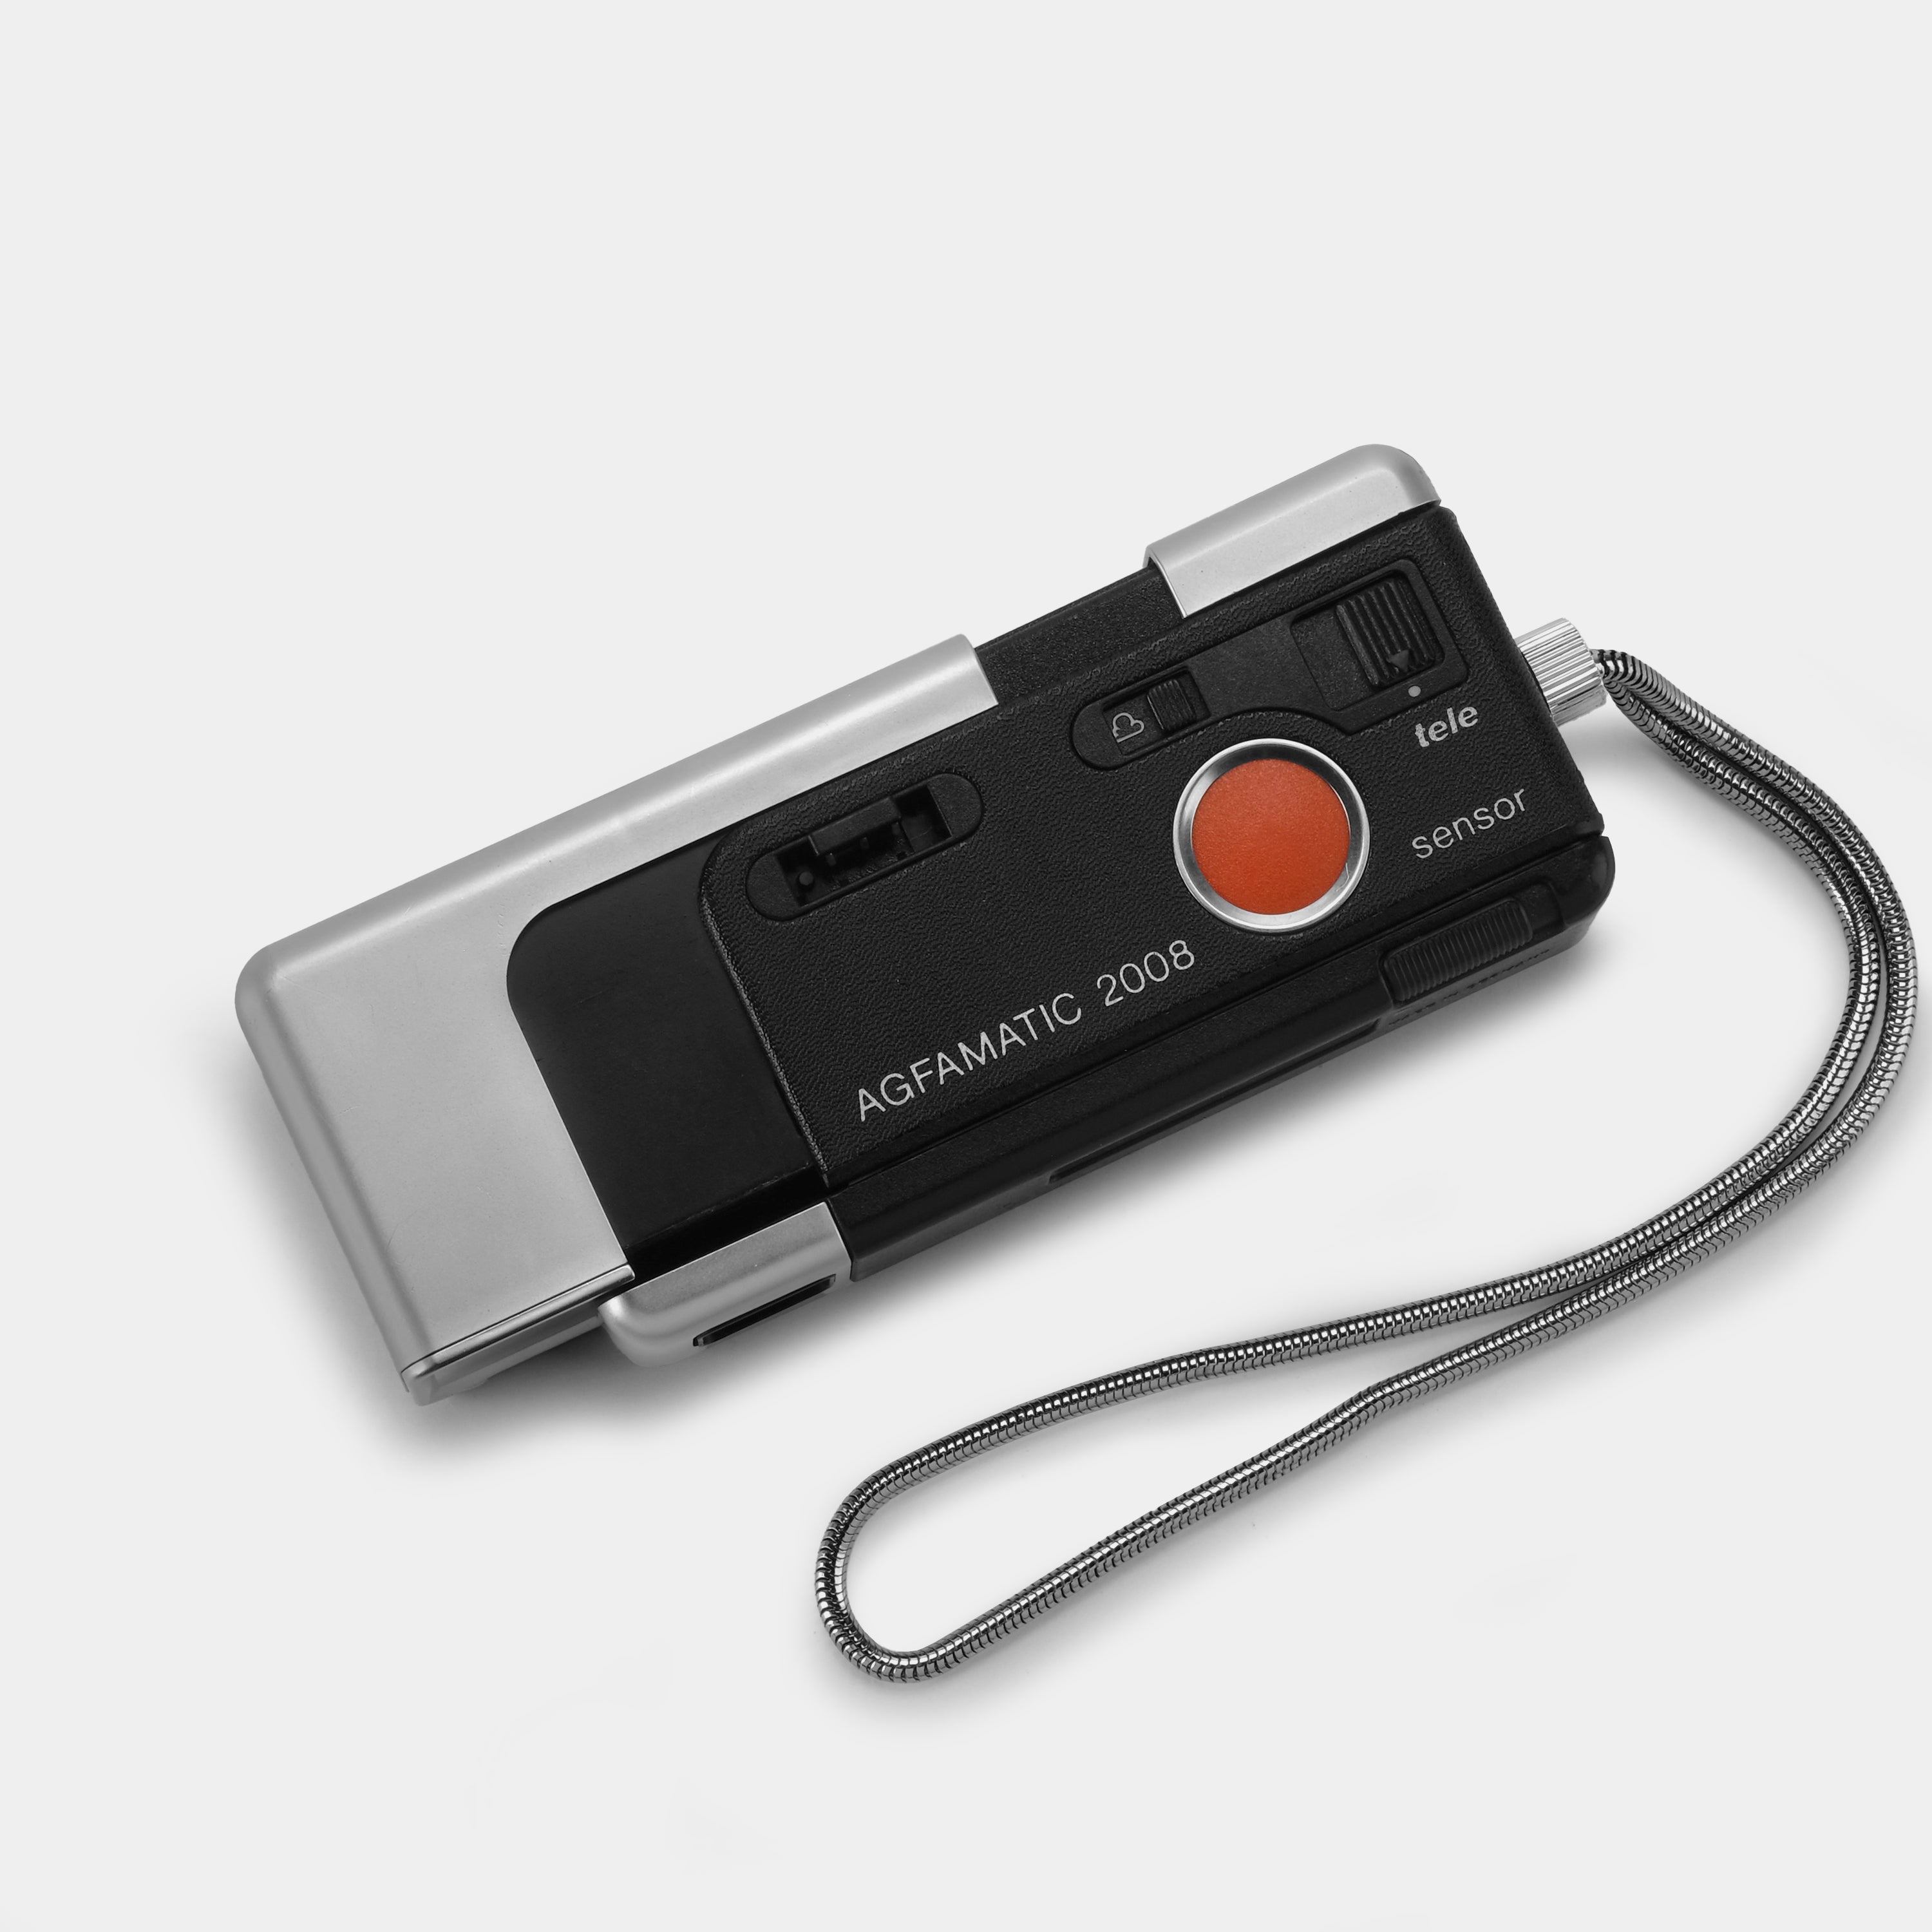 Agfamatic 2008 Tele Pocket Sensor 110 Format Film Camera